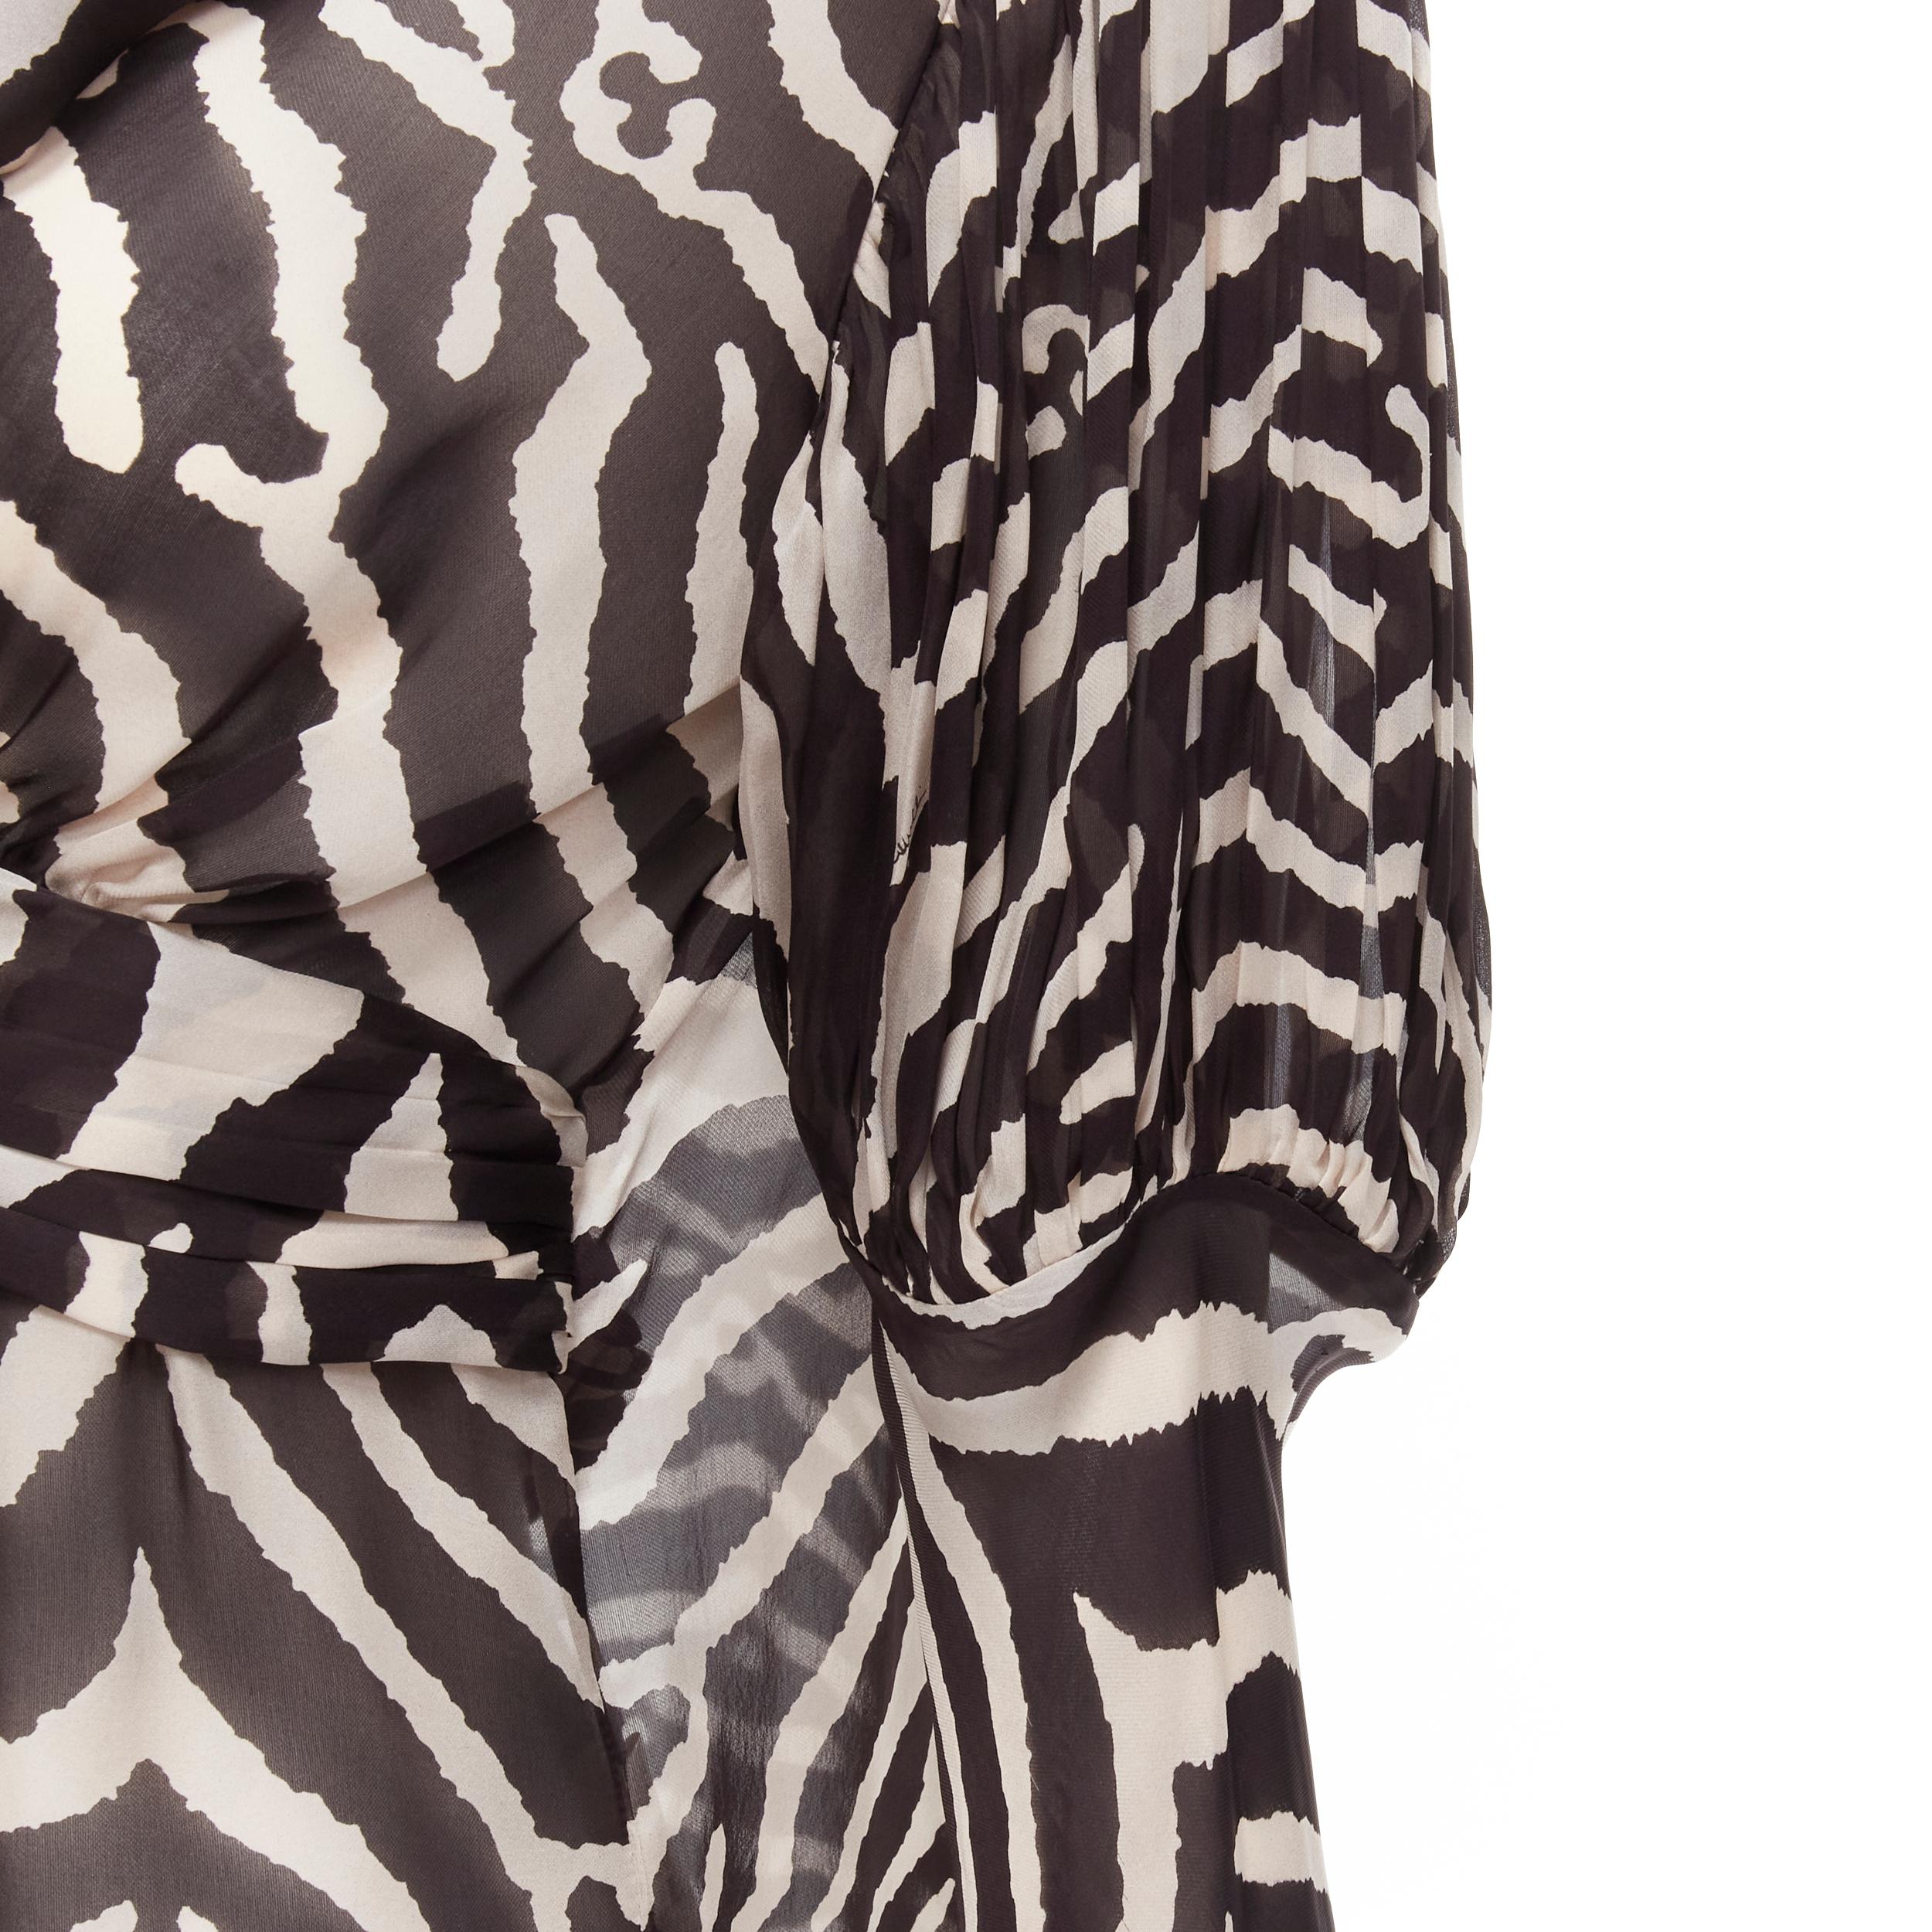 ROBERTO CAVALLI VIntage brown zebra striped print pussy bow silk blouse IT44 M 2